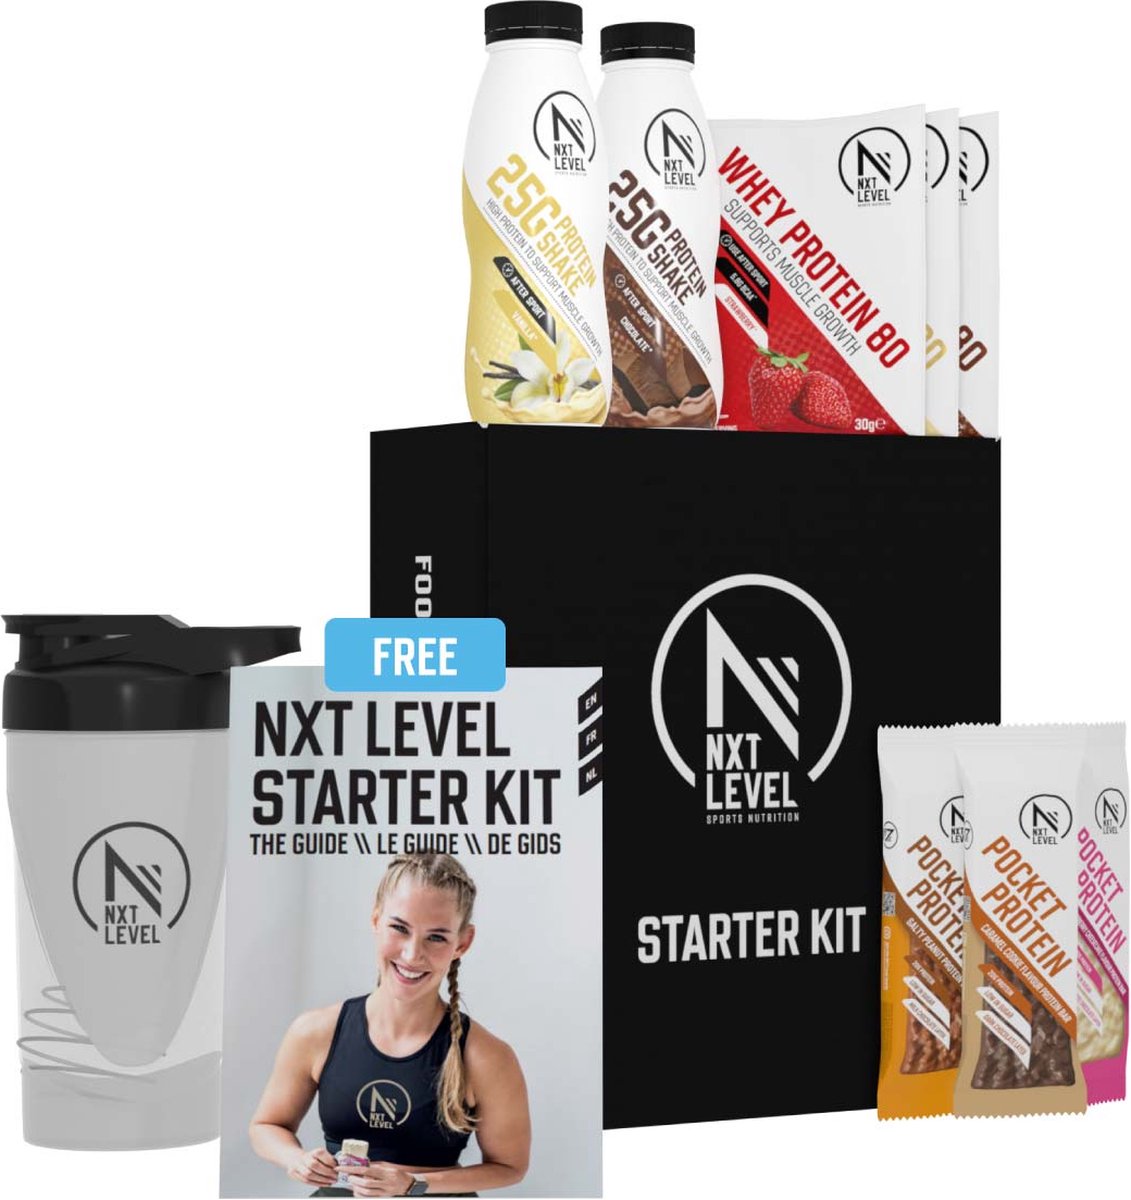 NXT Level Proteïne Starter Kit - Proefpakket met al onze bestsellers